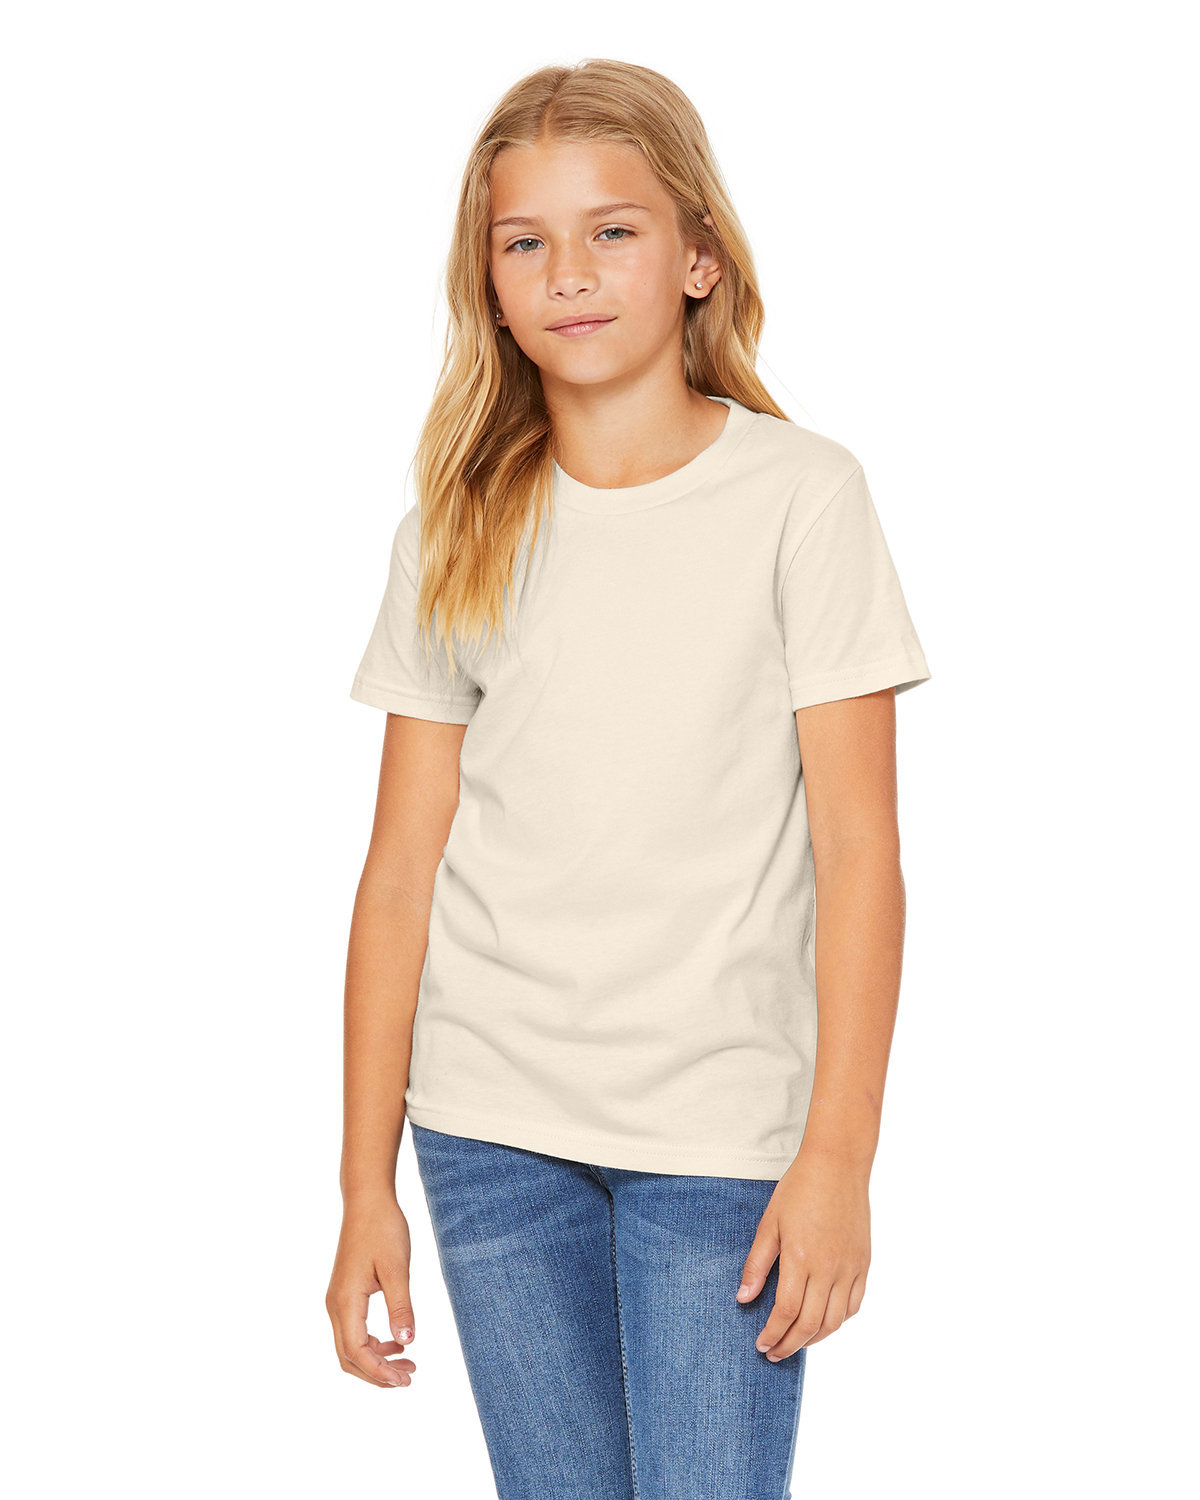 Bella + Canvas Youth Jersey T-Shirt NATURAL 